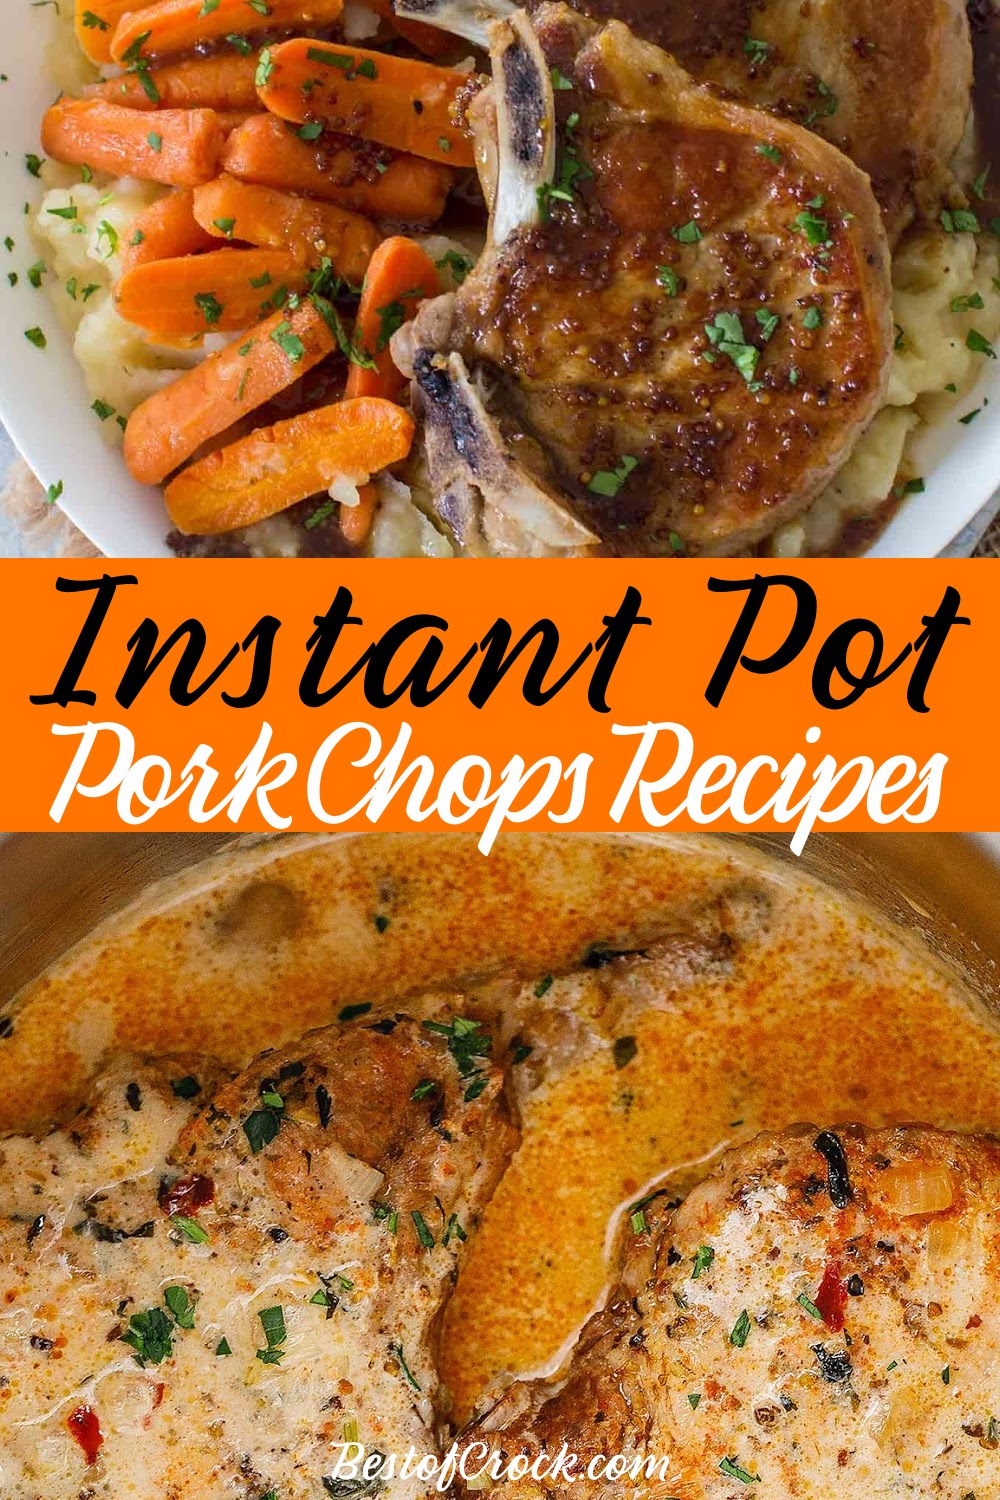 Easy Instant Pot Pork Chops Recipes - Best of Crock